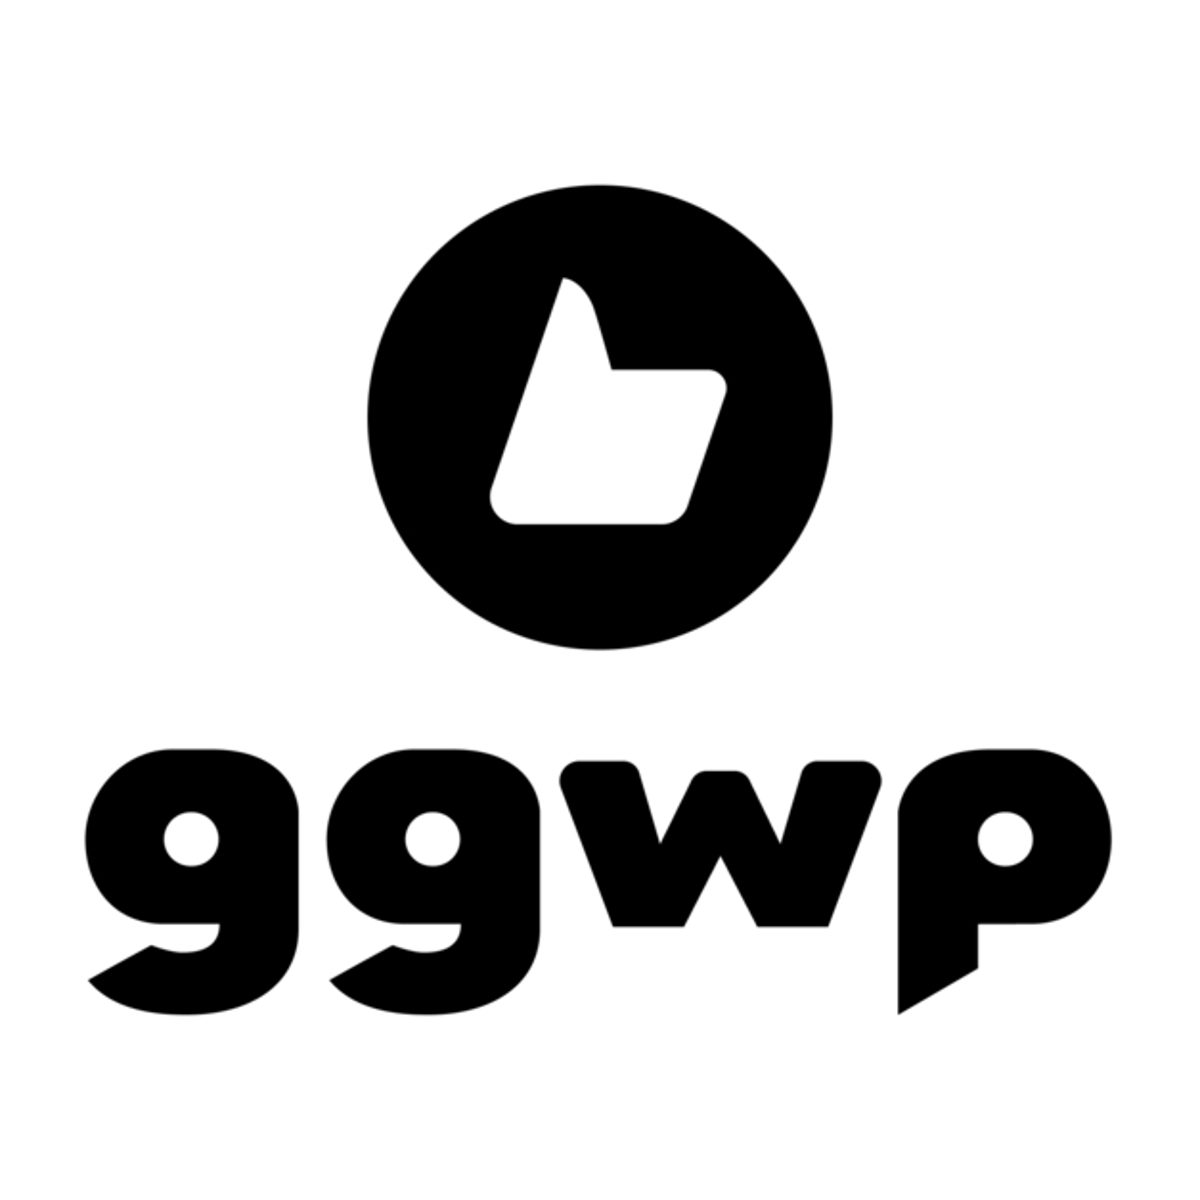 GGWP raises $12m in seed funding